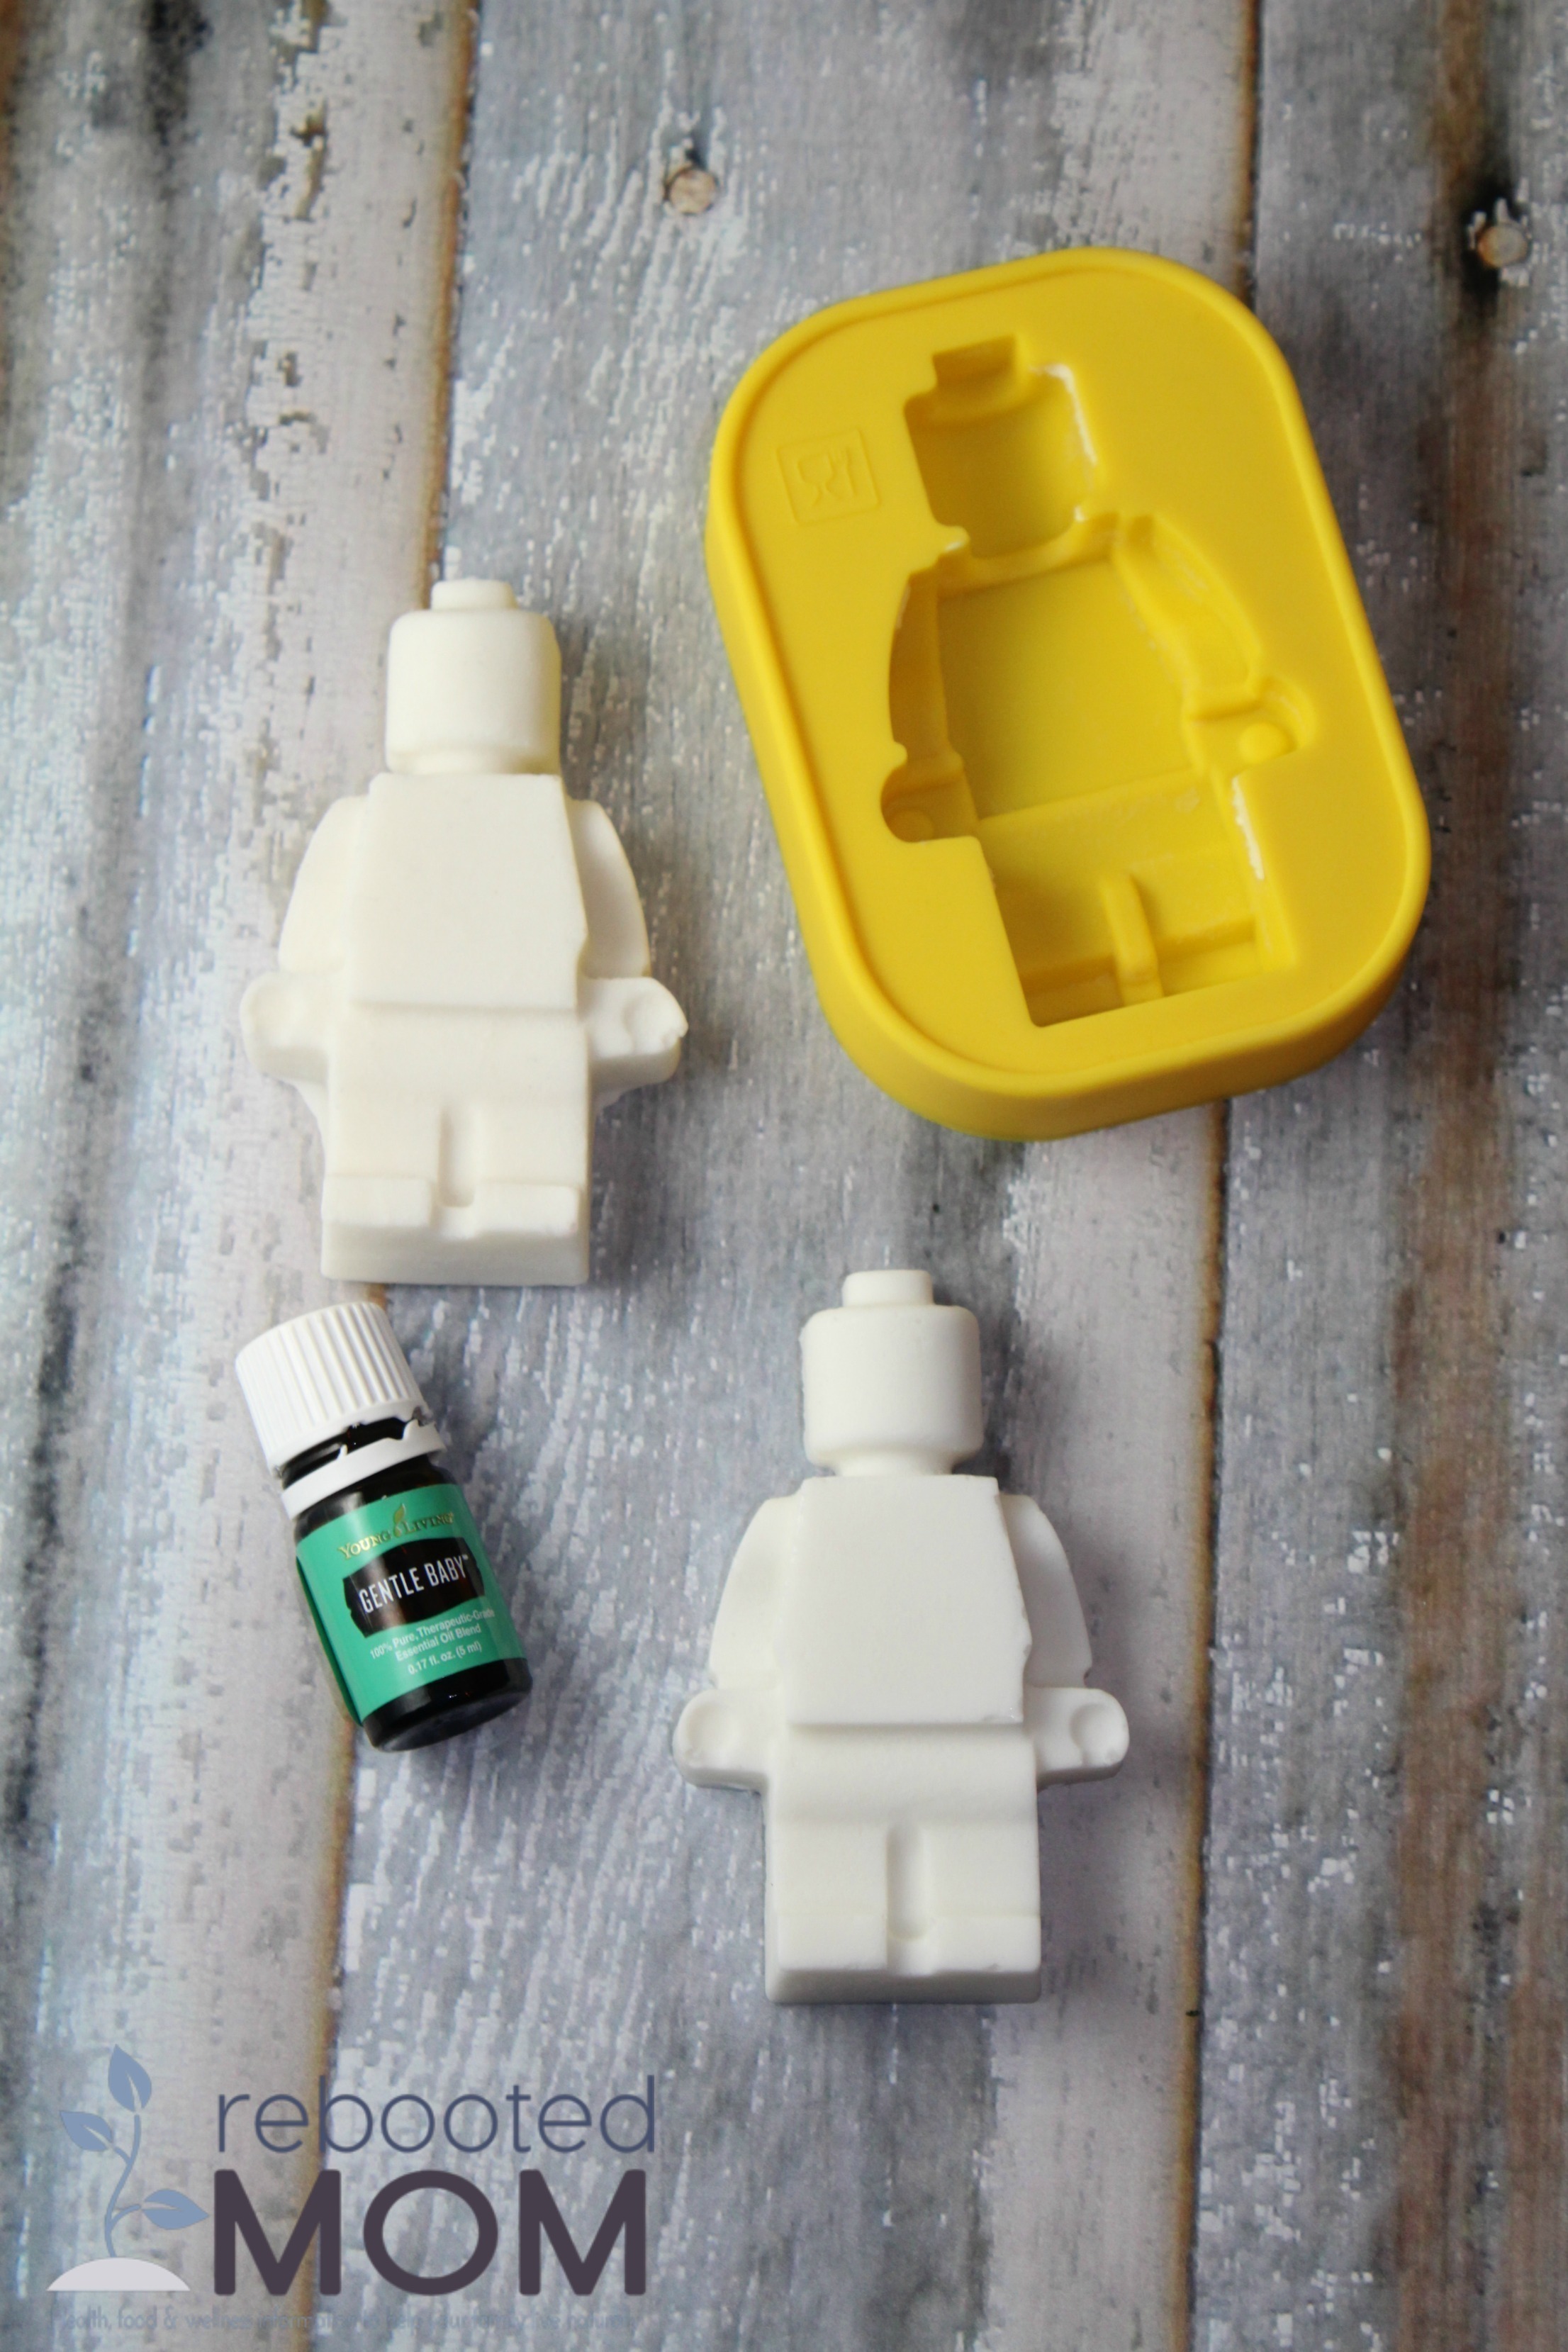 DIY LEGO Soap with Essential Oils